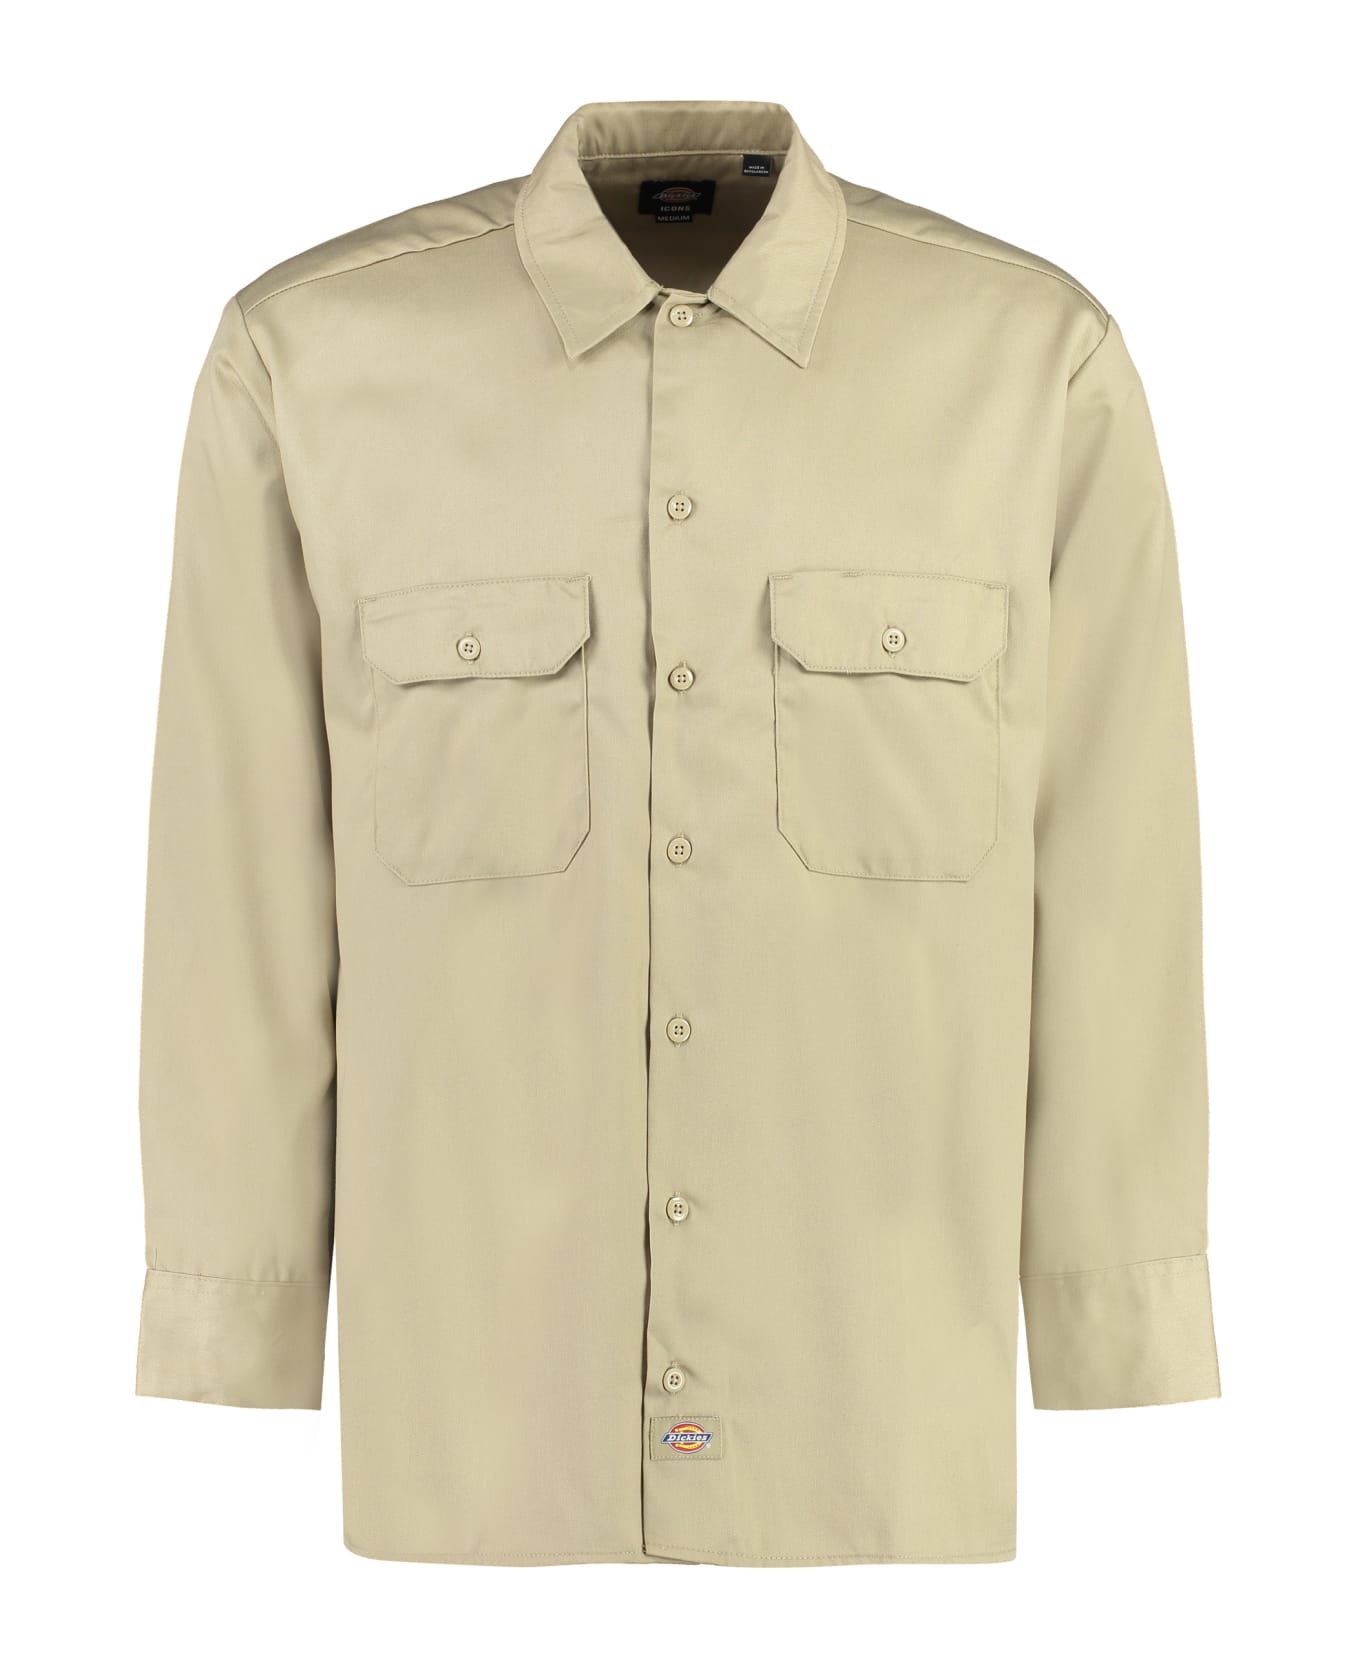 Dickies Long Sleeve Cotton Blend Shirt - khaki